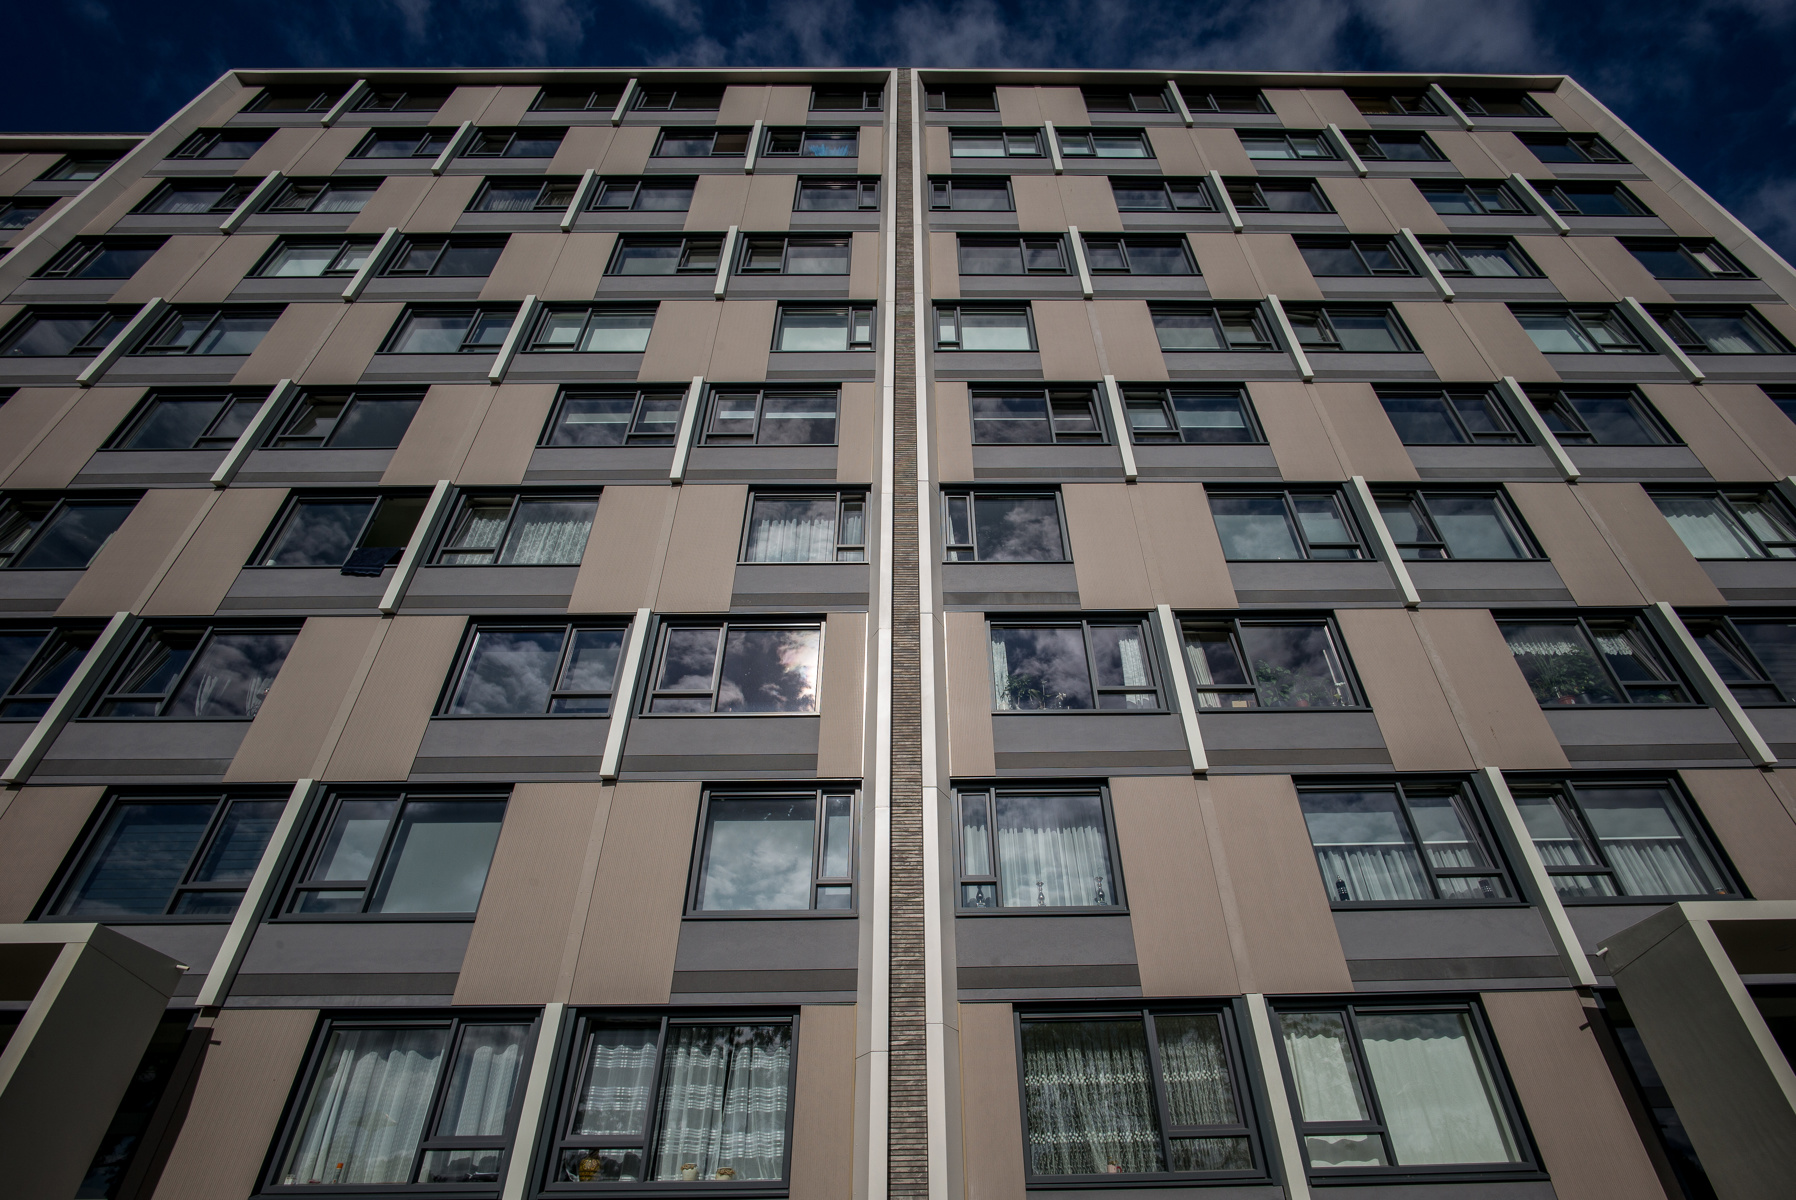 Dėmesys projektui: būstų projektas „ACA flat“ Utrechto Overvechto rajone